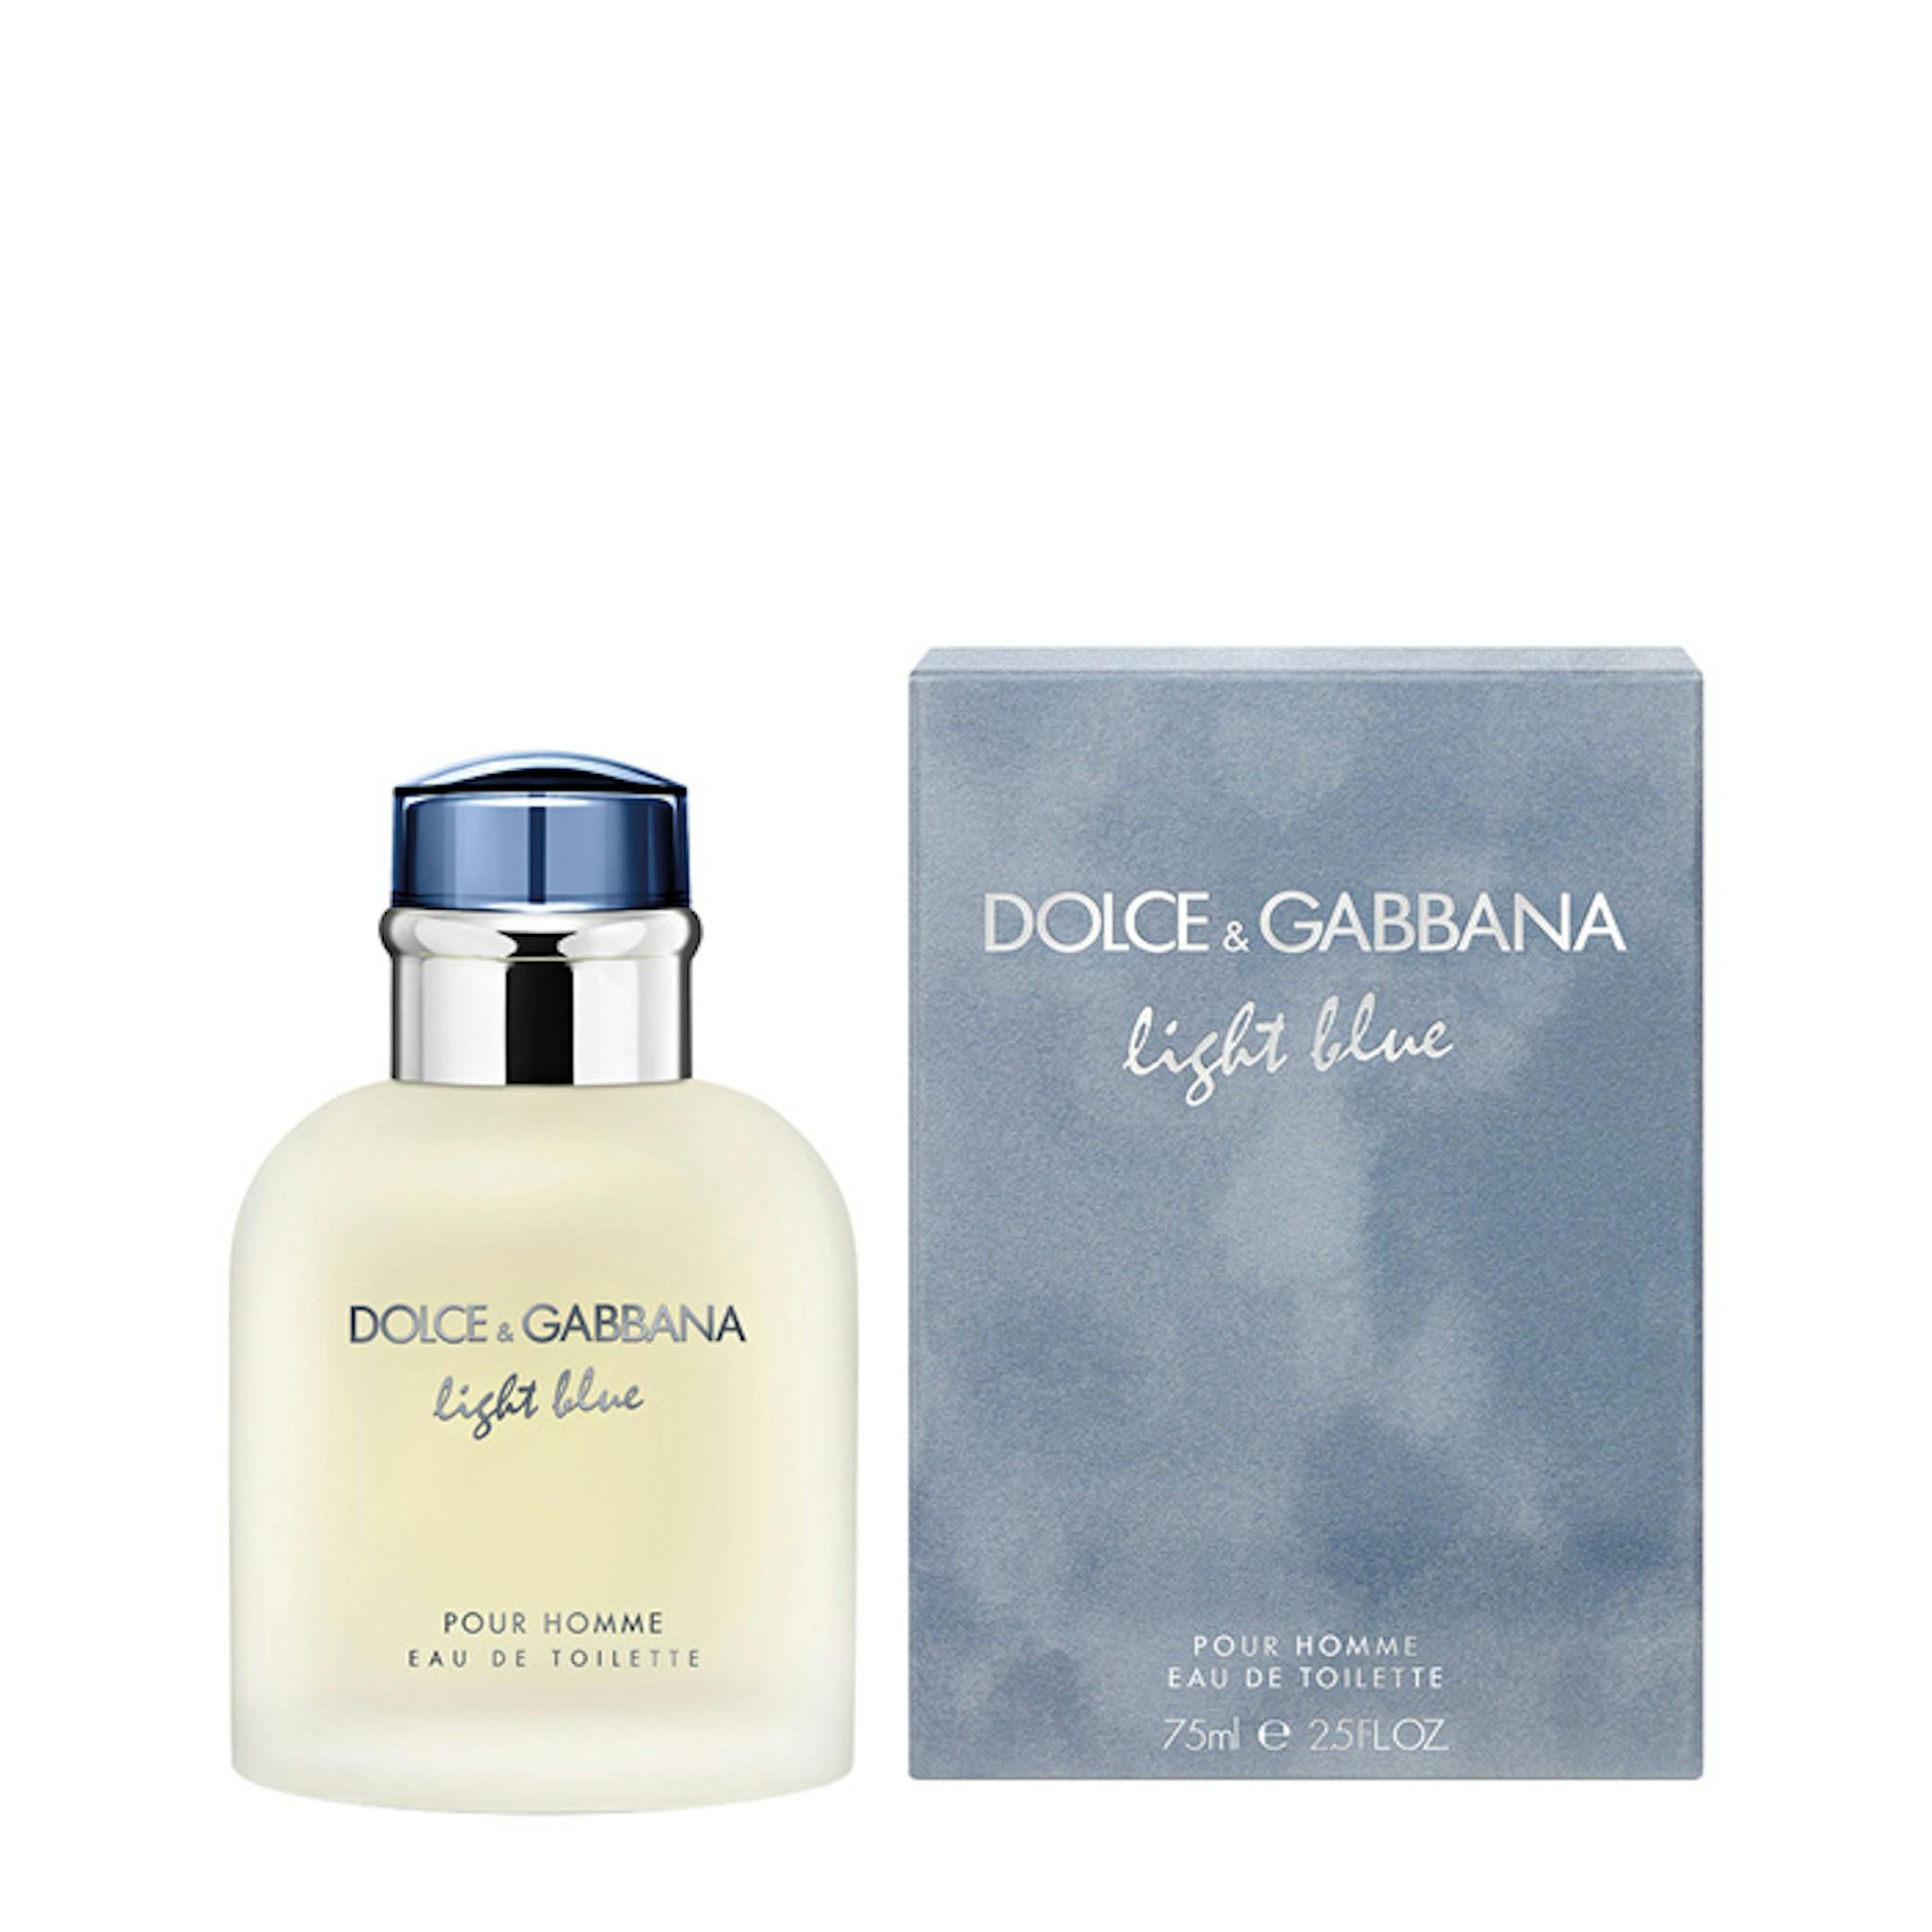 Dolce & Gabbana Eau De Toilette 75ml Spray | The Fragrance Shop